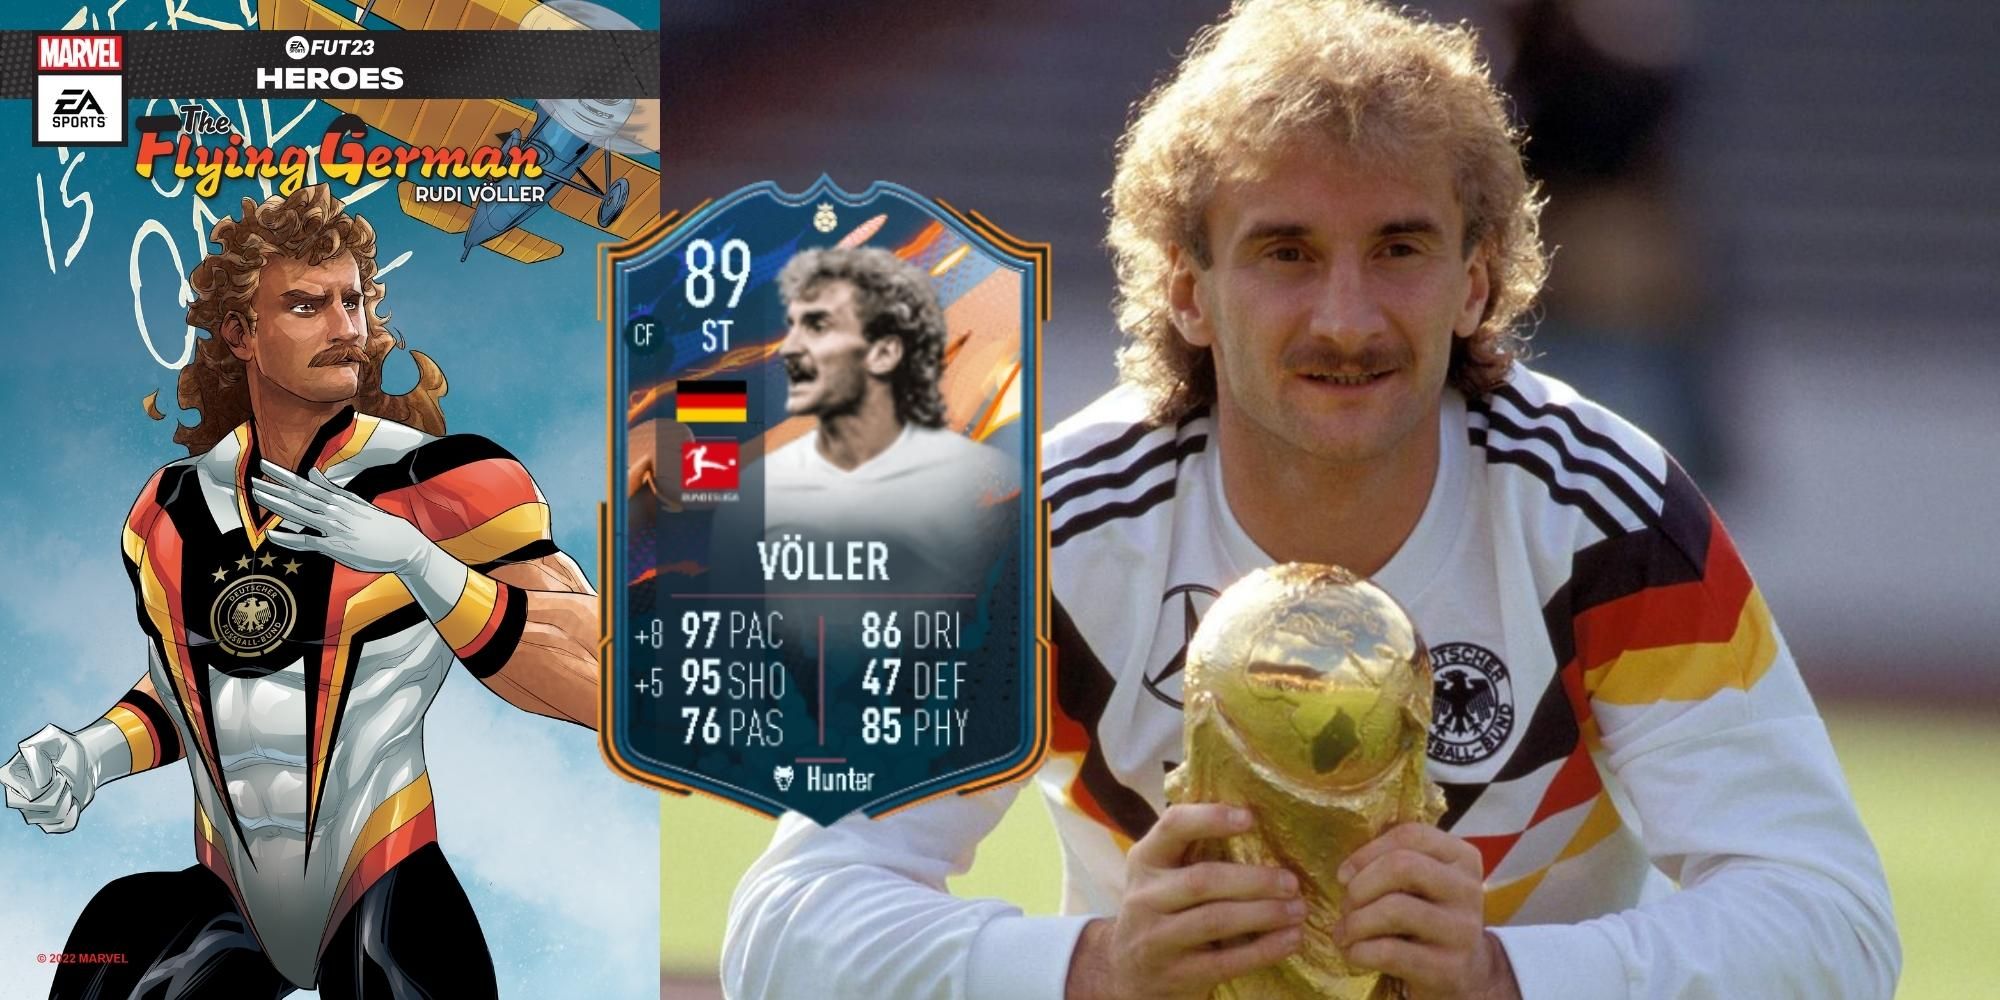 FIFA 23 Ultimate Team: FUT Hero Rudi Voller